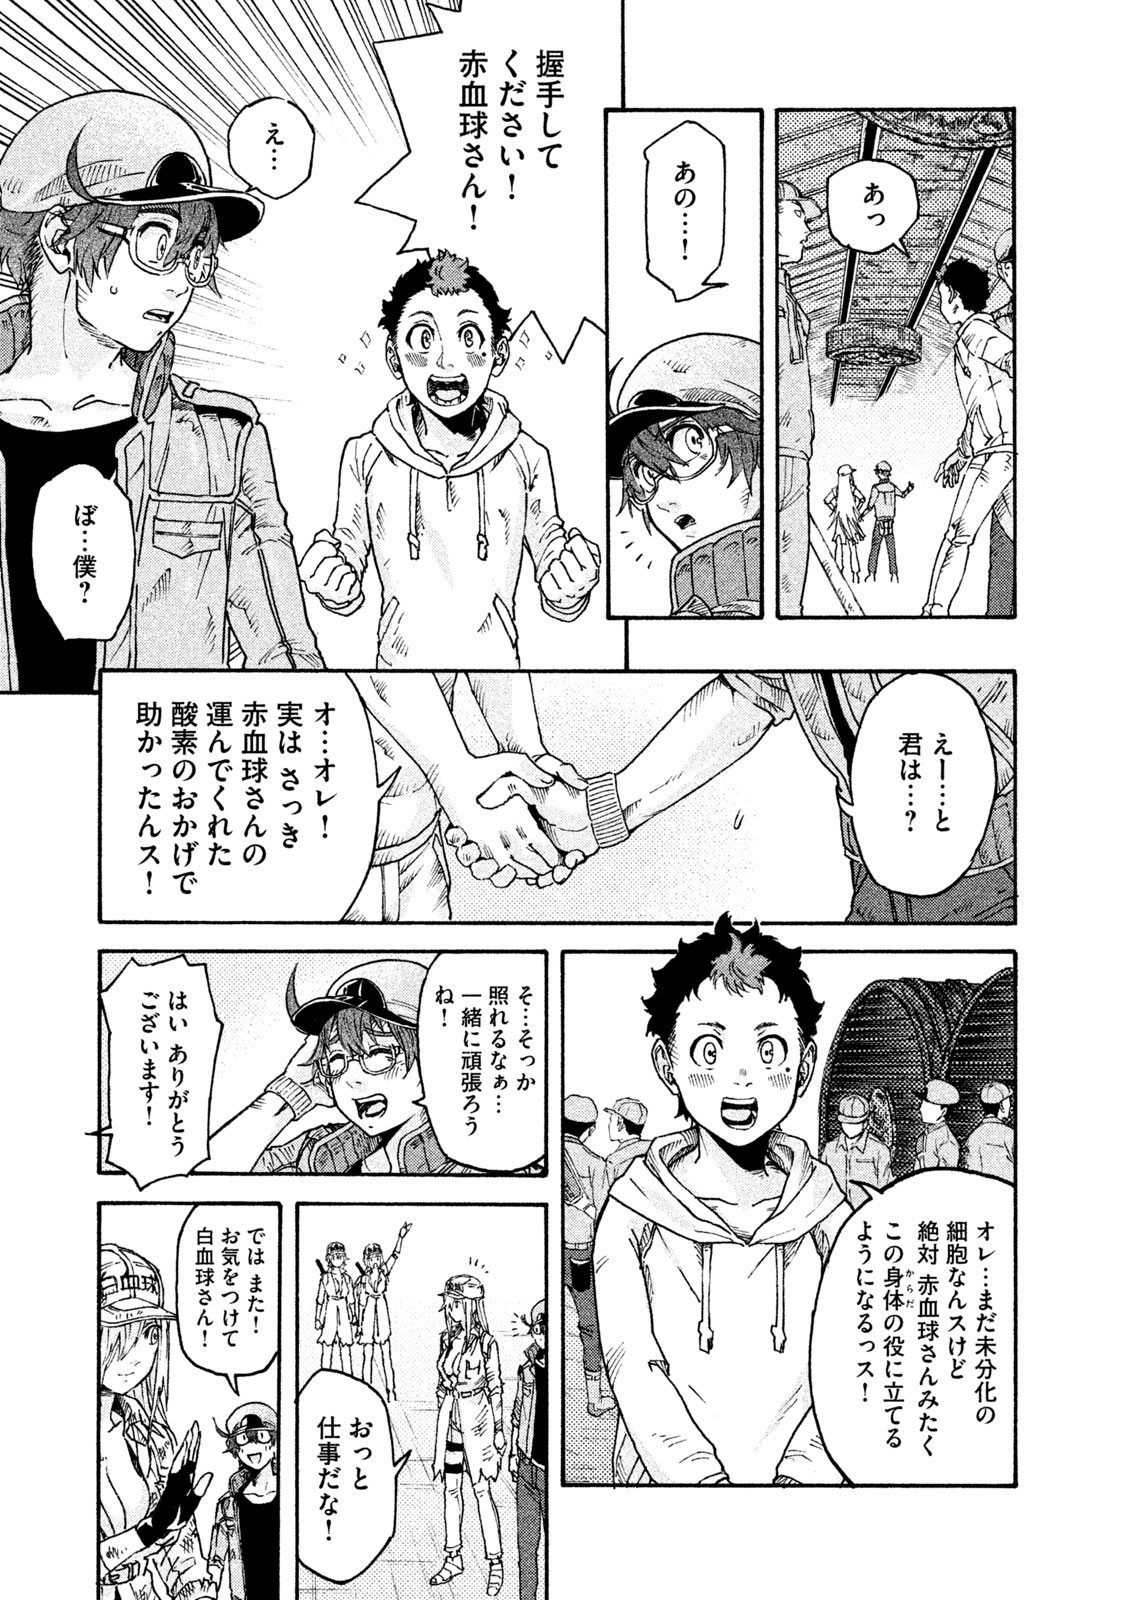 Hataraku Saibou BLACK - Chapter 18 - Page 9